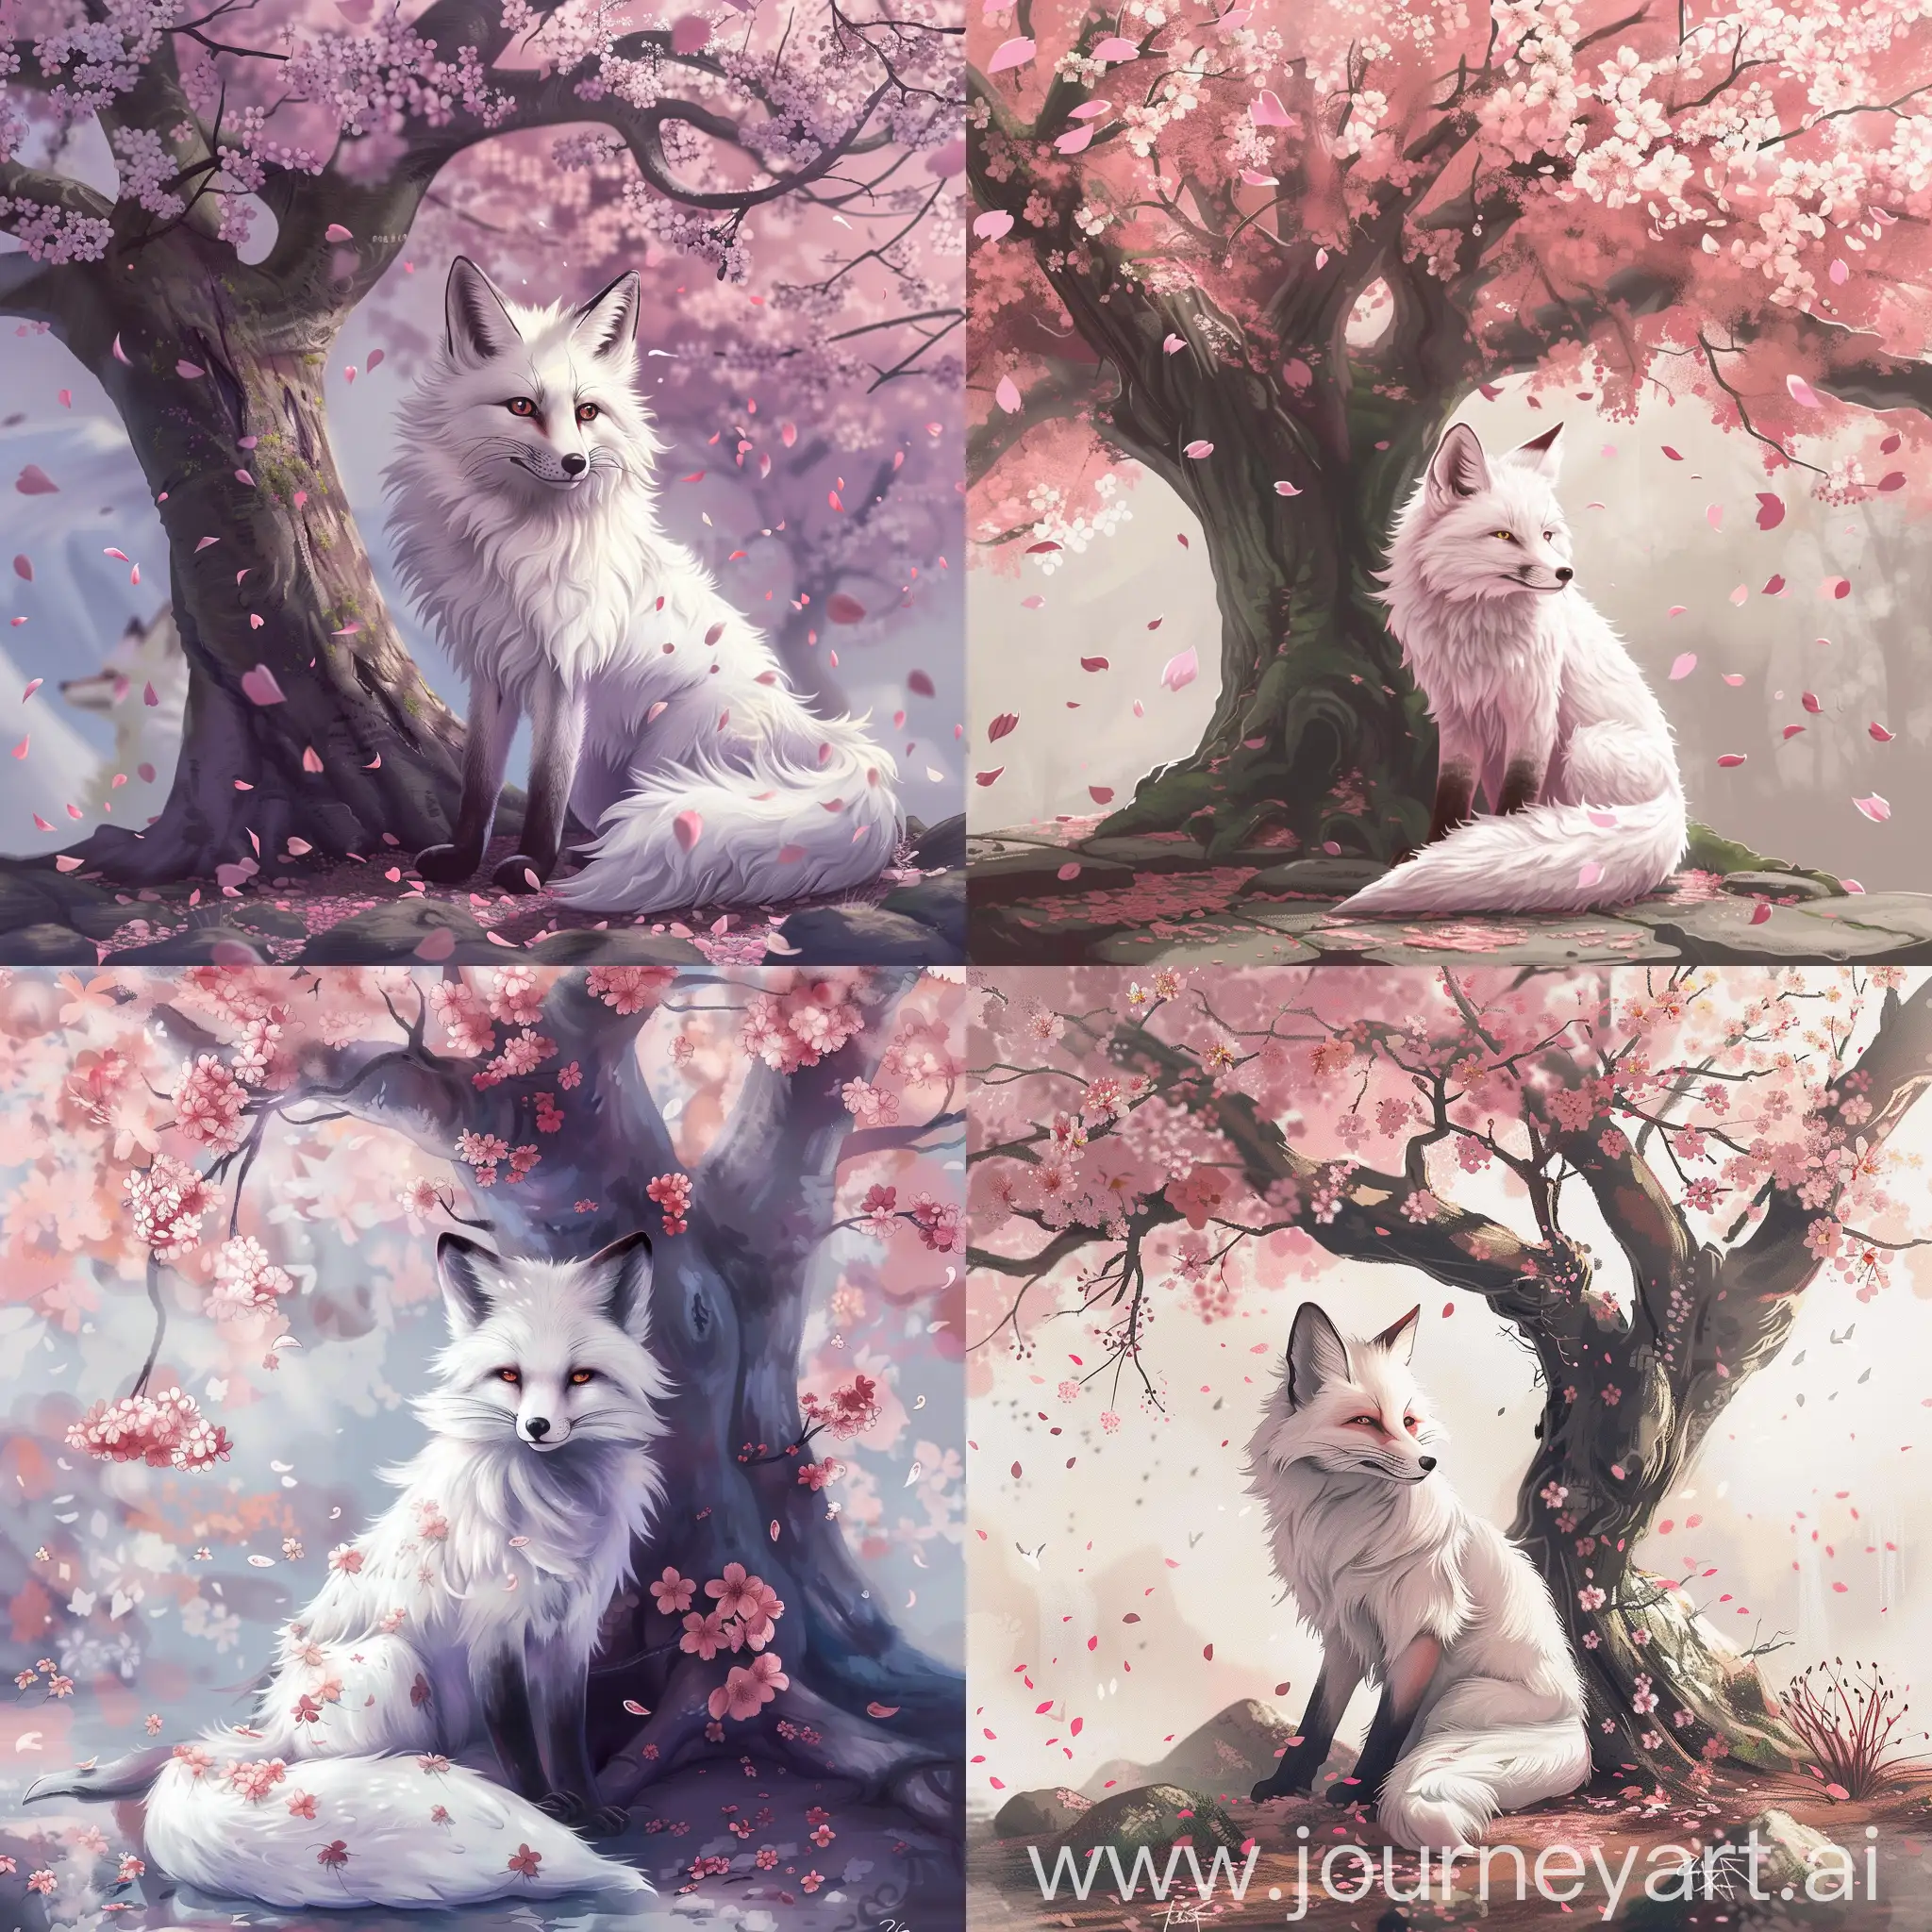 Majestic-White-NineTailed-Fox-Beneath-Blossoming-Cherry-Tree